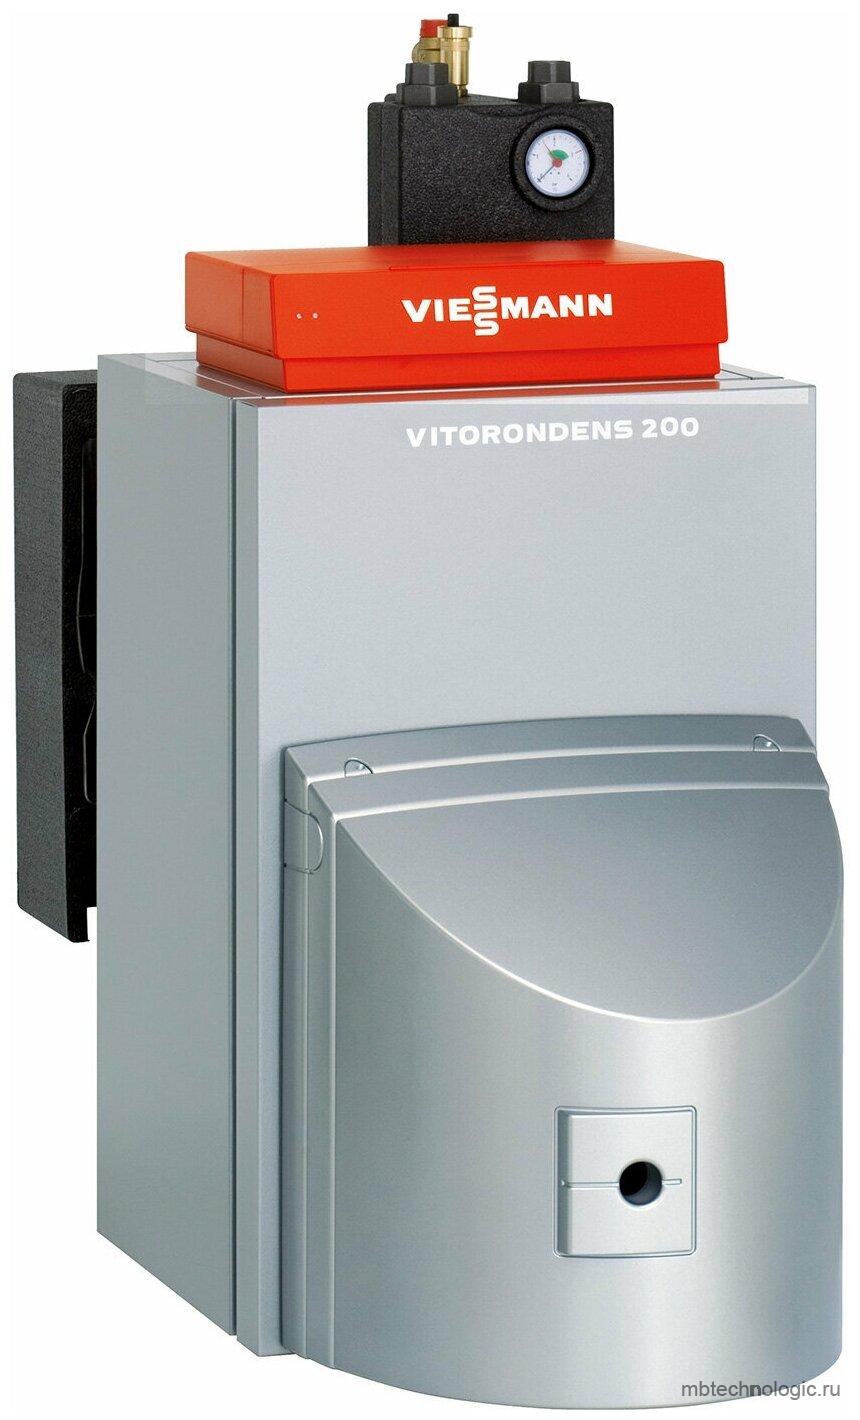 Viessmann Vitorondens 200-T BR2A025